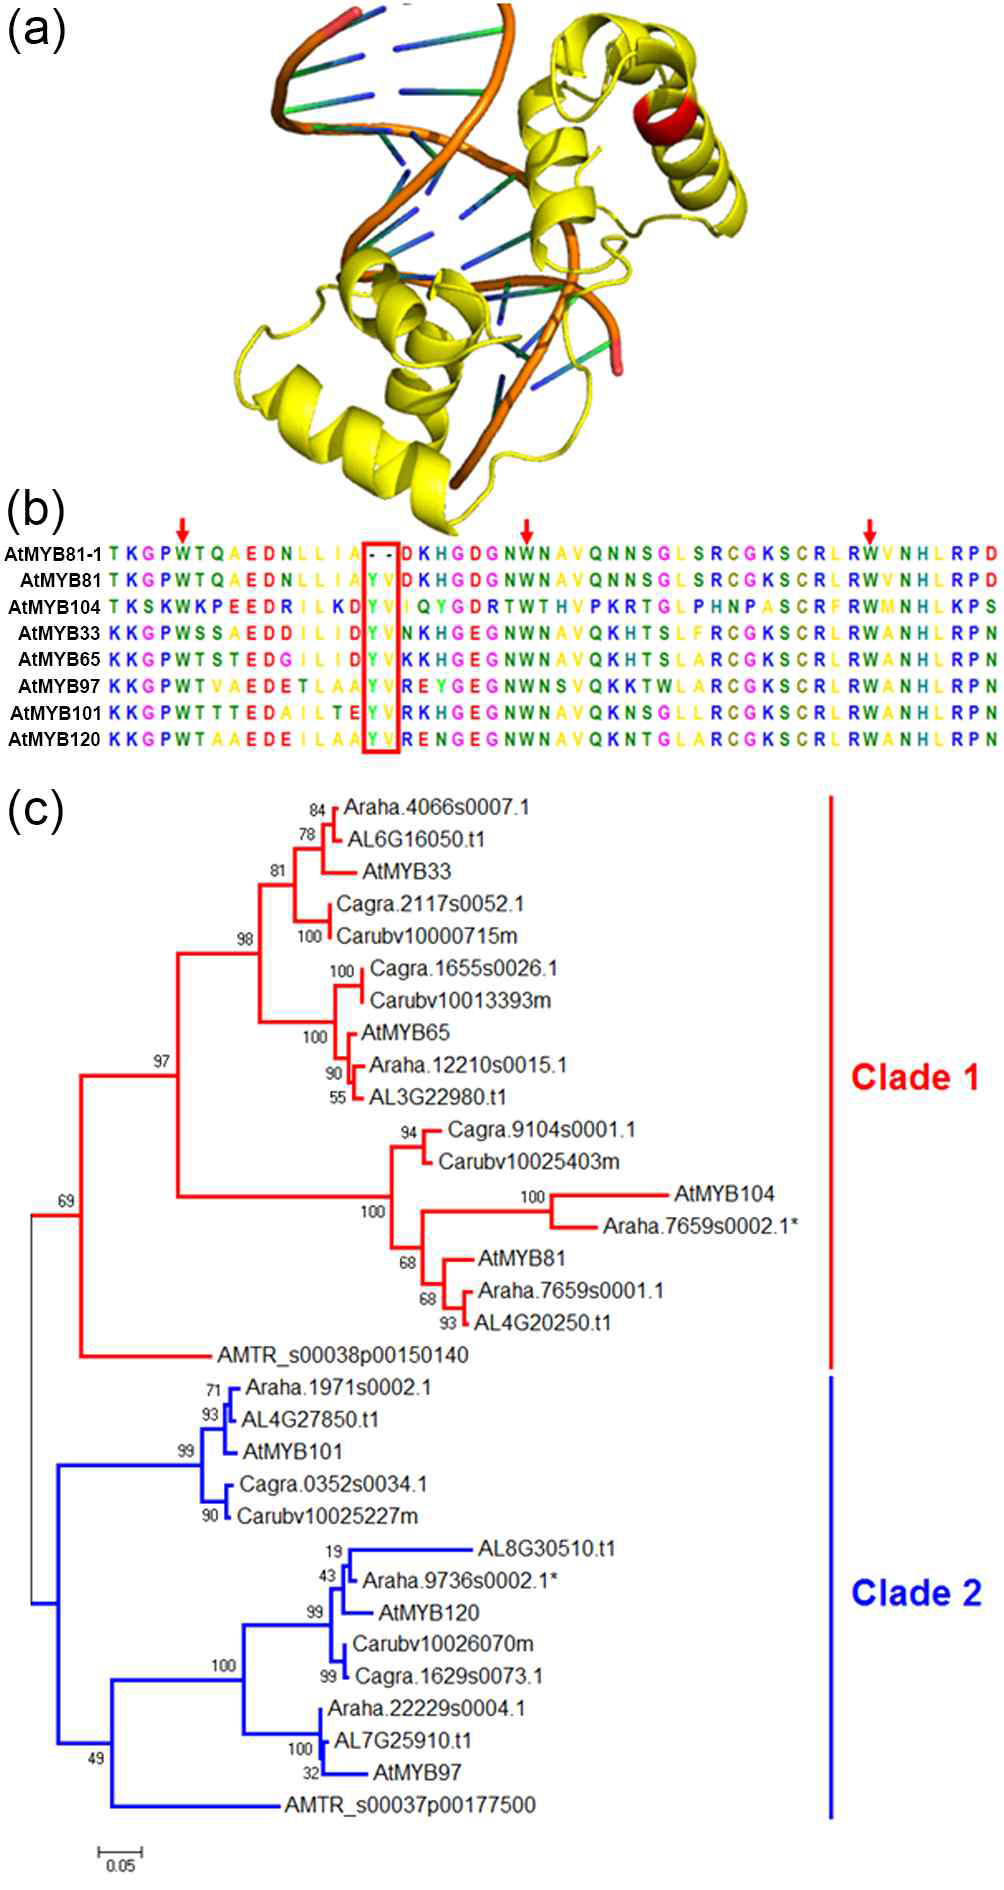 MYB81 구조 및 유전학적 유연관계도. (a) DNA와 결합하는 MYB81의 R2R3 부위의 구조. 상실된 2aa가 붉게 표시됨. (b) GAMYB 계열 성분 단백질의 비교. 상실된 2aa는 계열내에서 잘 보존되어 있어 중요부위임을 시사함. (c) GAMYB 성분단백질들의 유전적 유연관계도